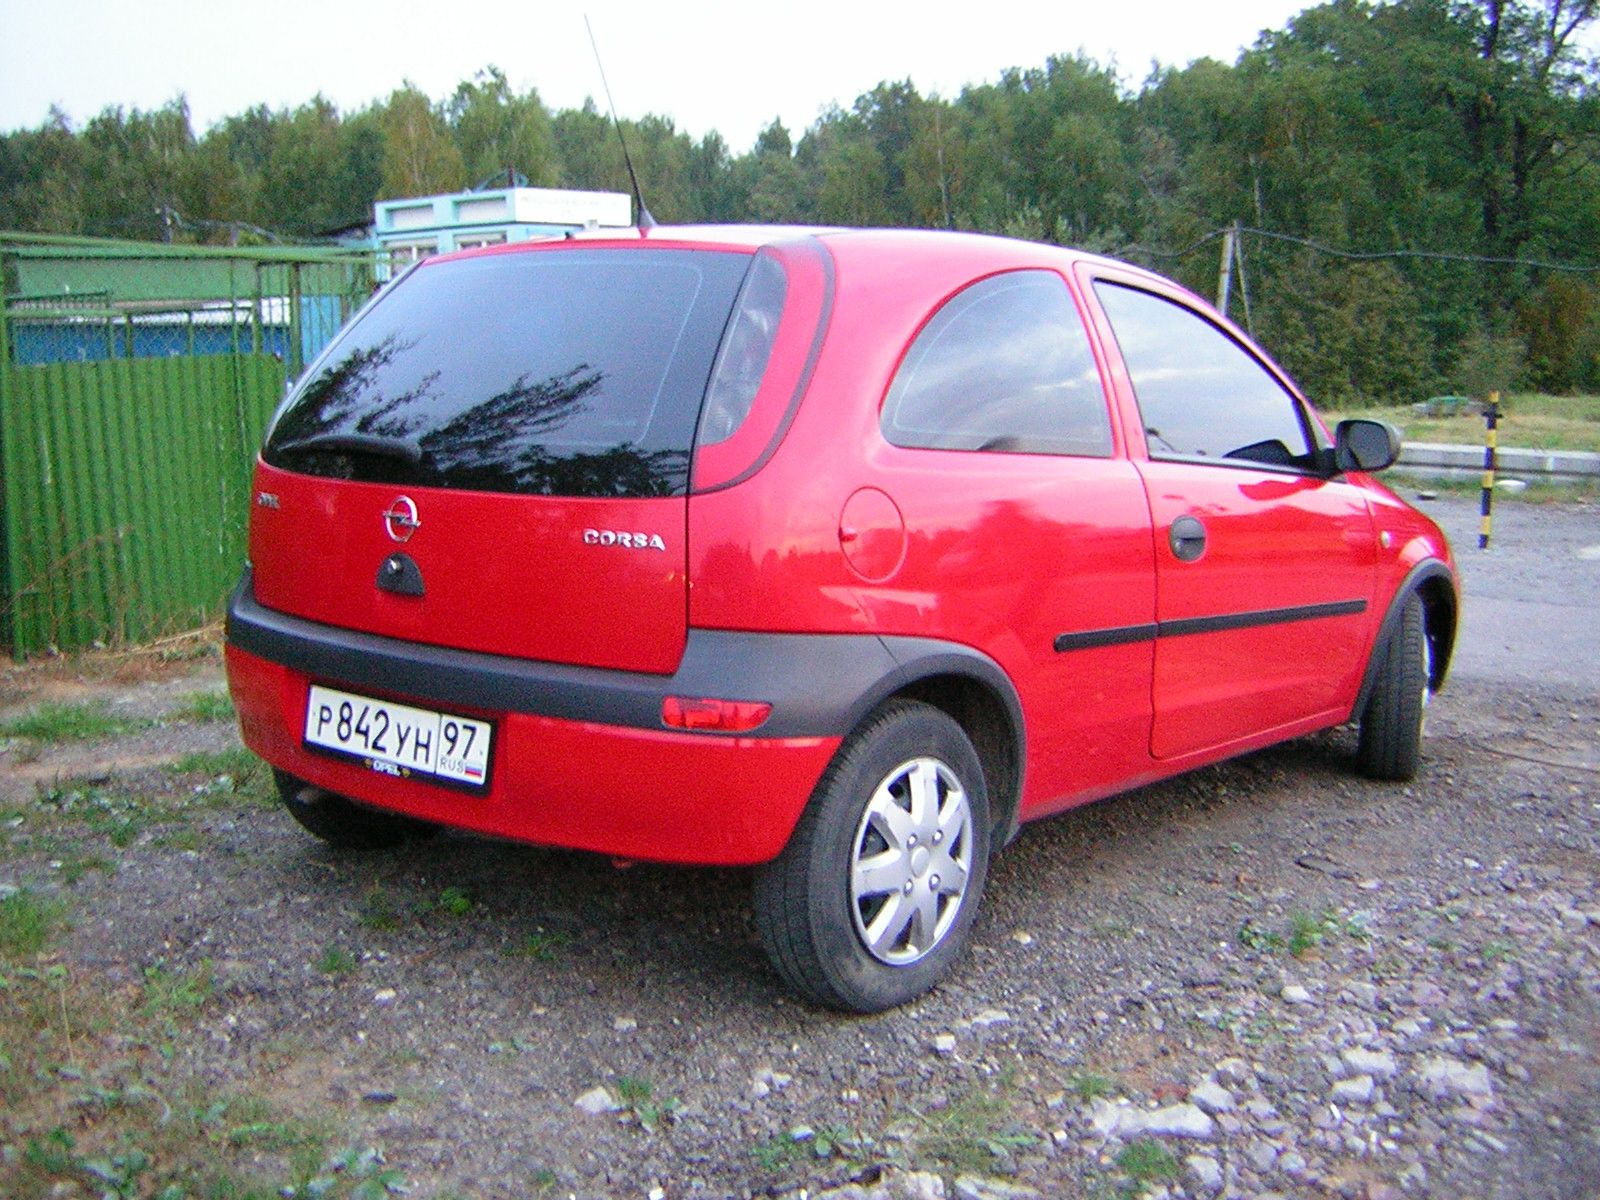 Опель корса 2001 год. Опель Корса 2001. Opel Corsa c 2001. Опель Корса купе 2001. Опель Корса 1.2 2001.